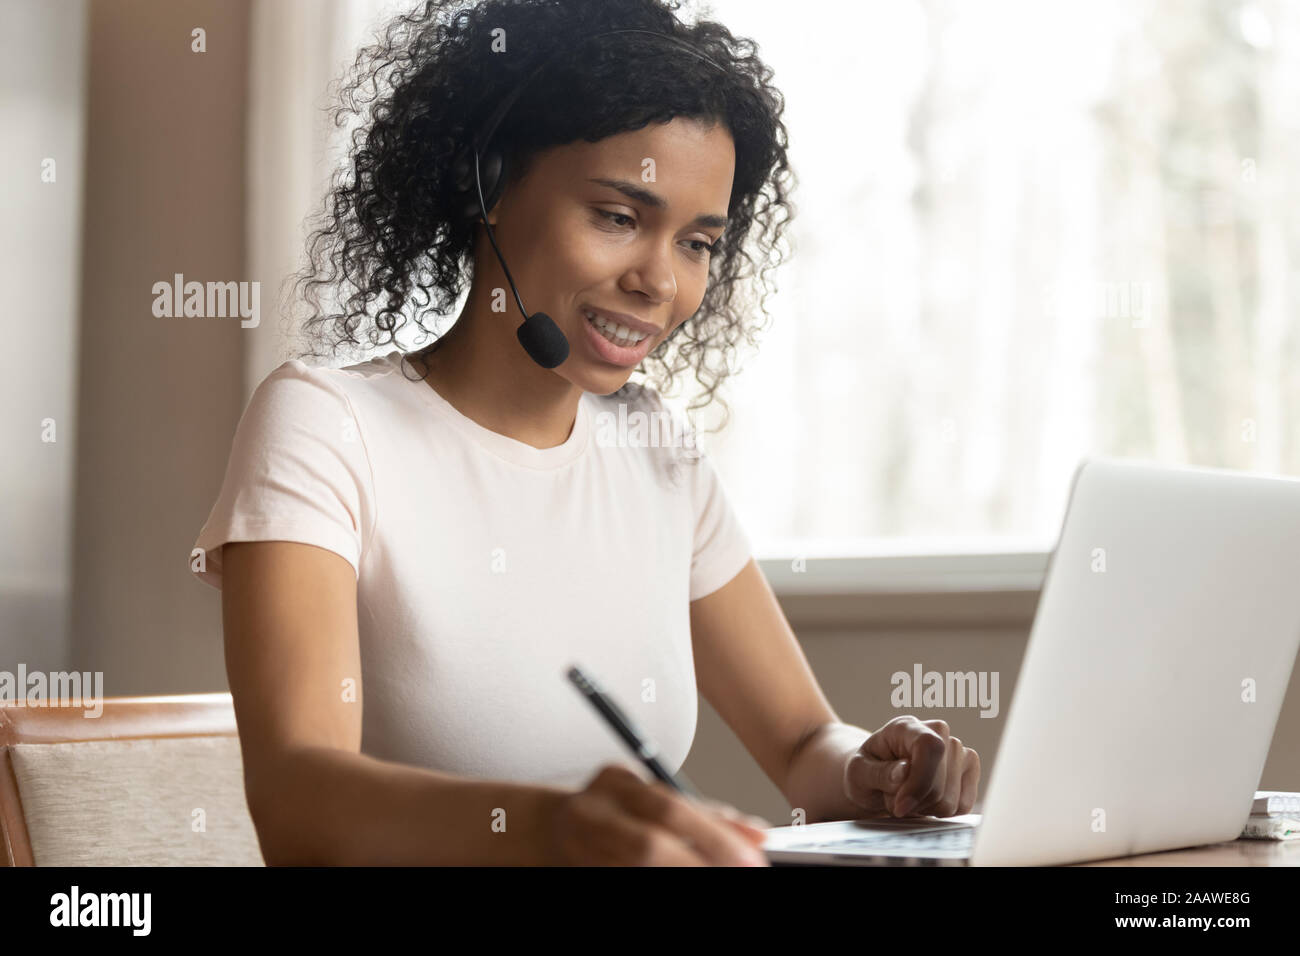 African American woman in headphones watch webinar on laptop Stock Photo